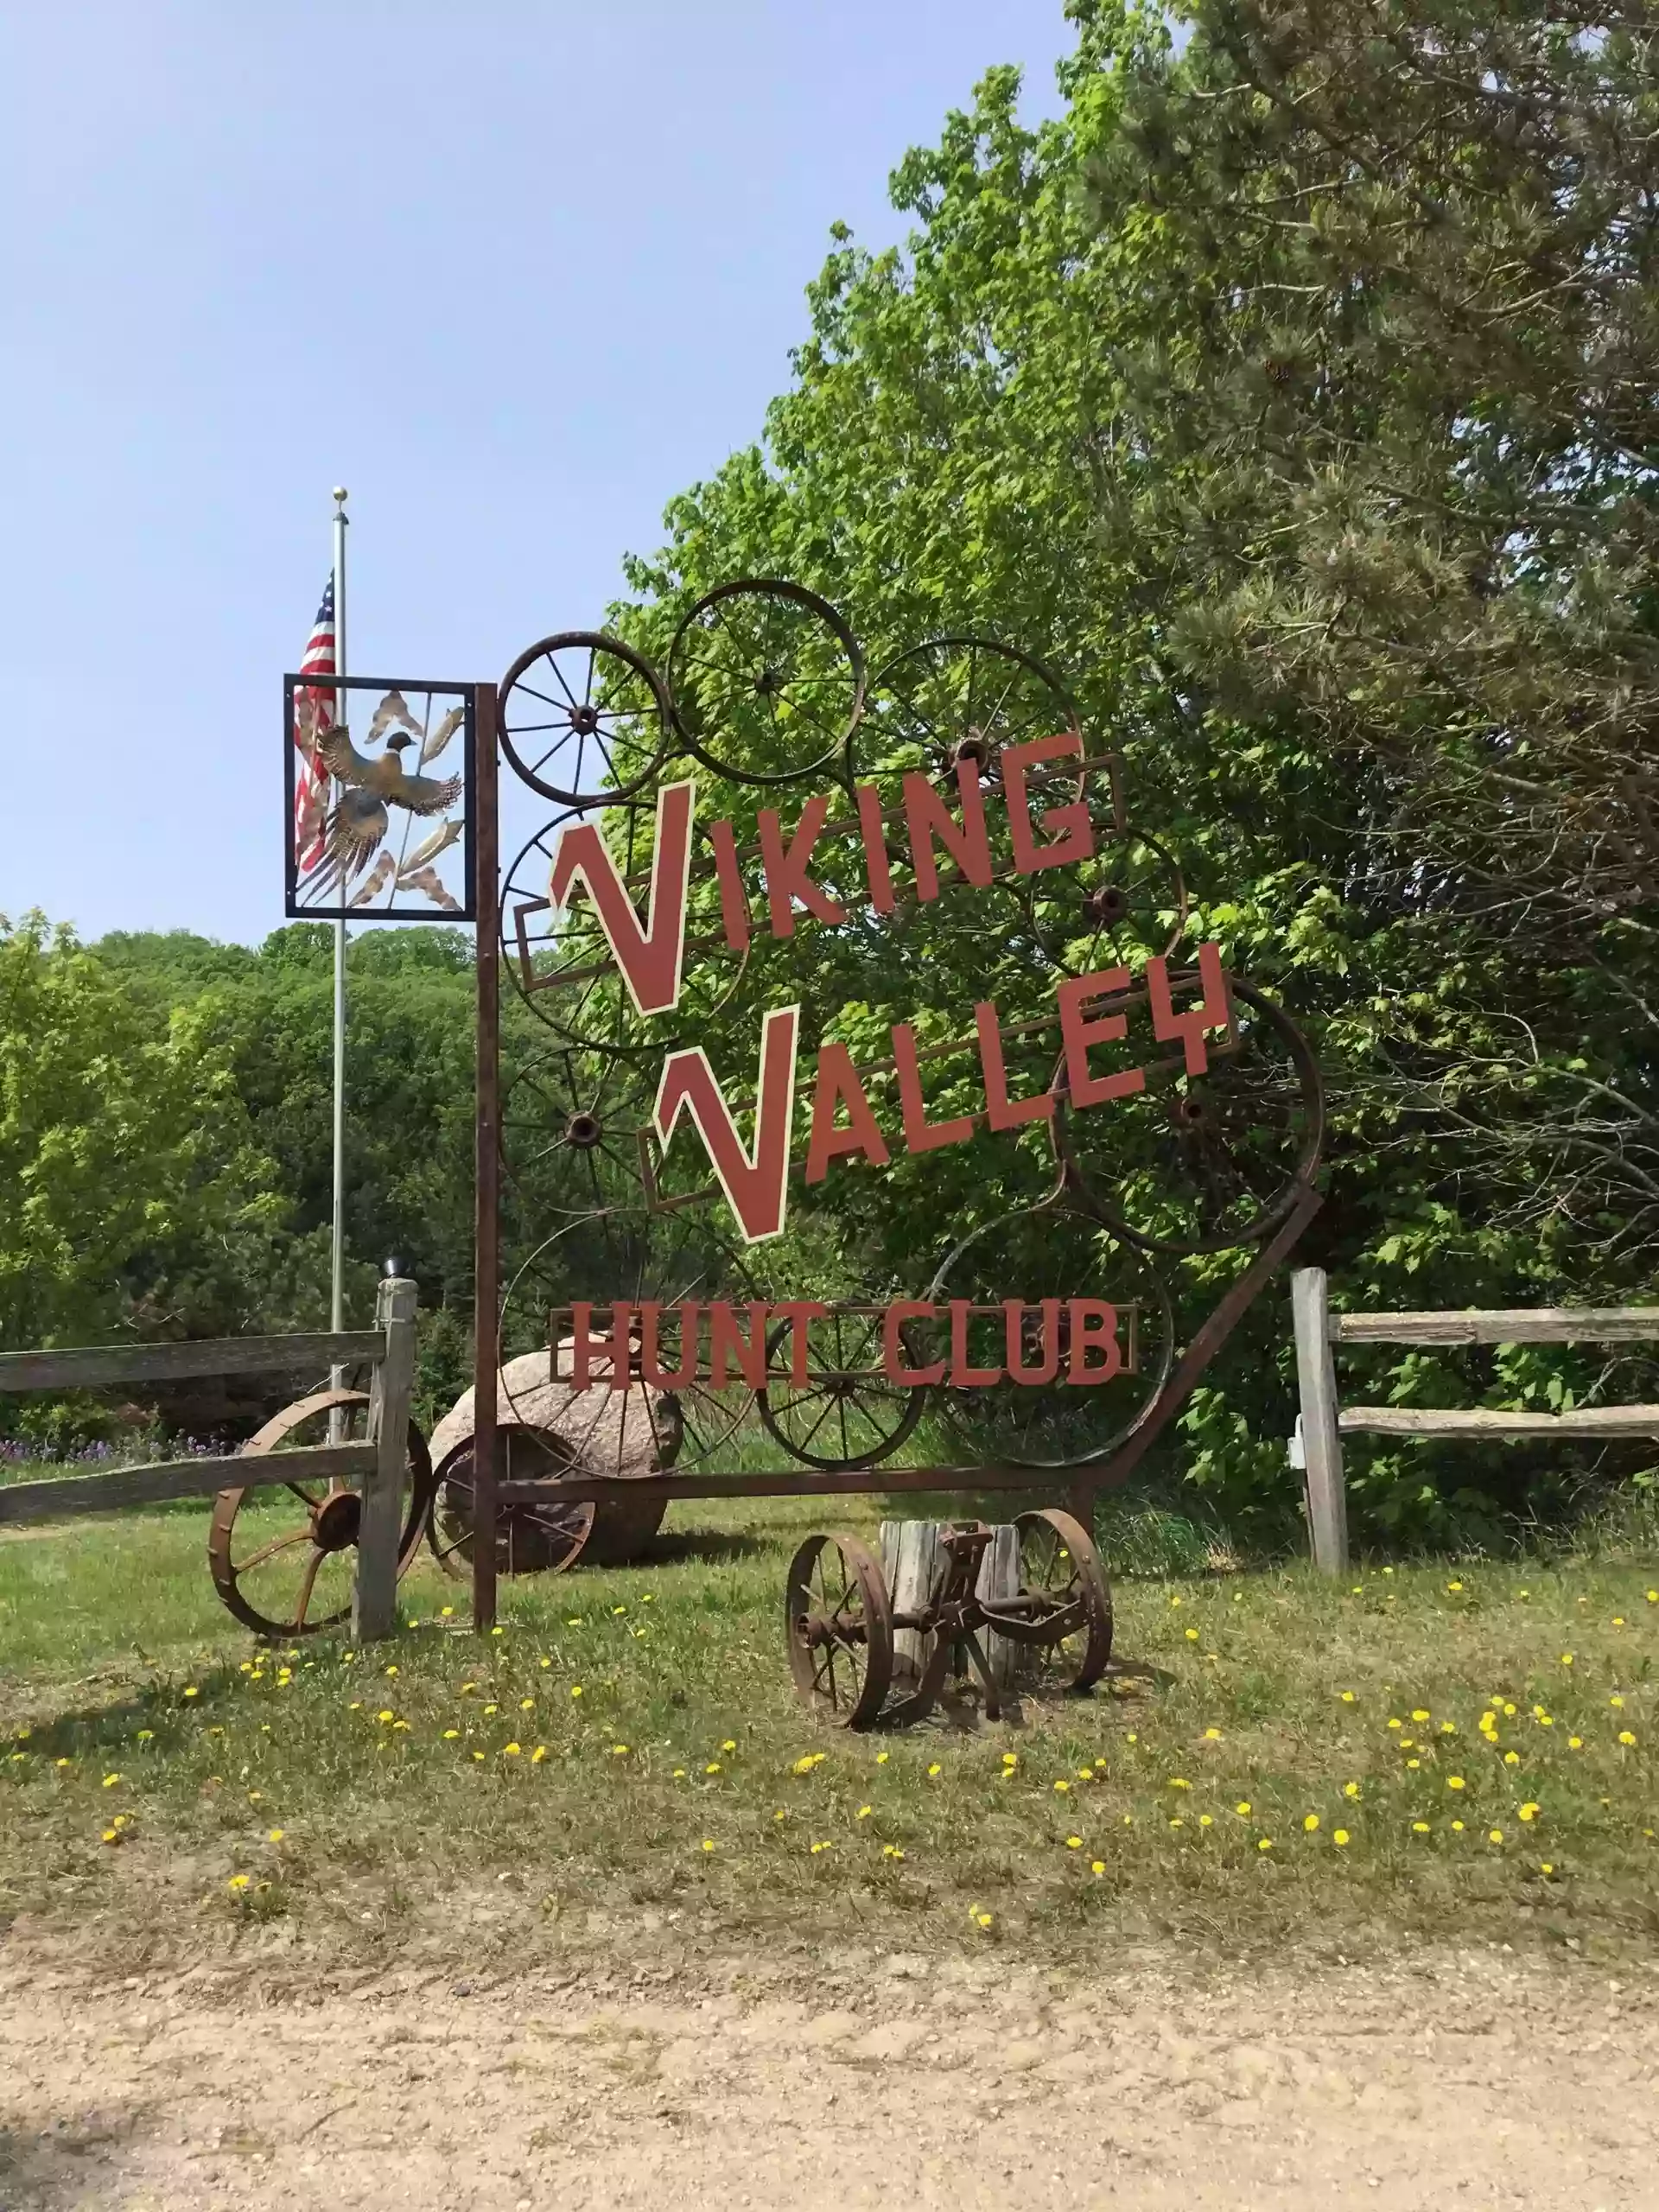 Viking Valley Hunt Club